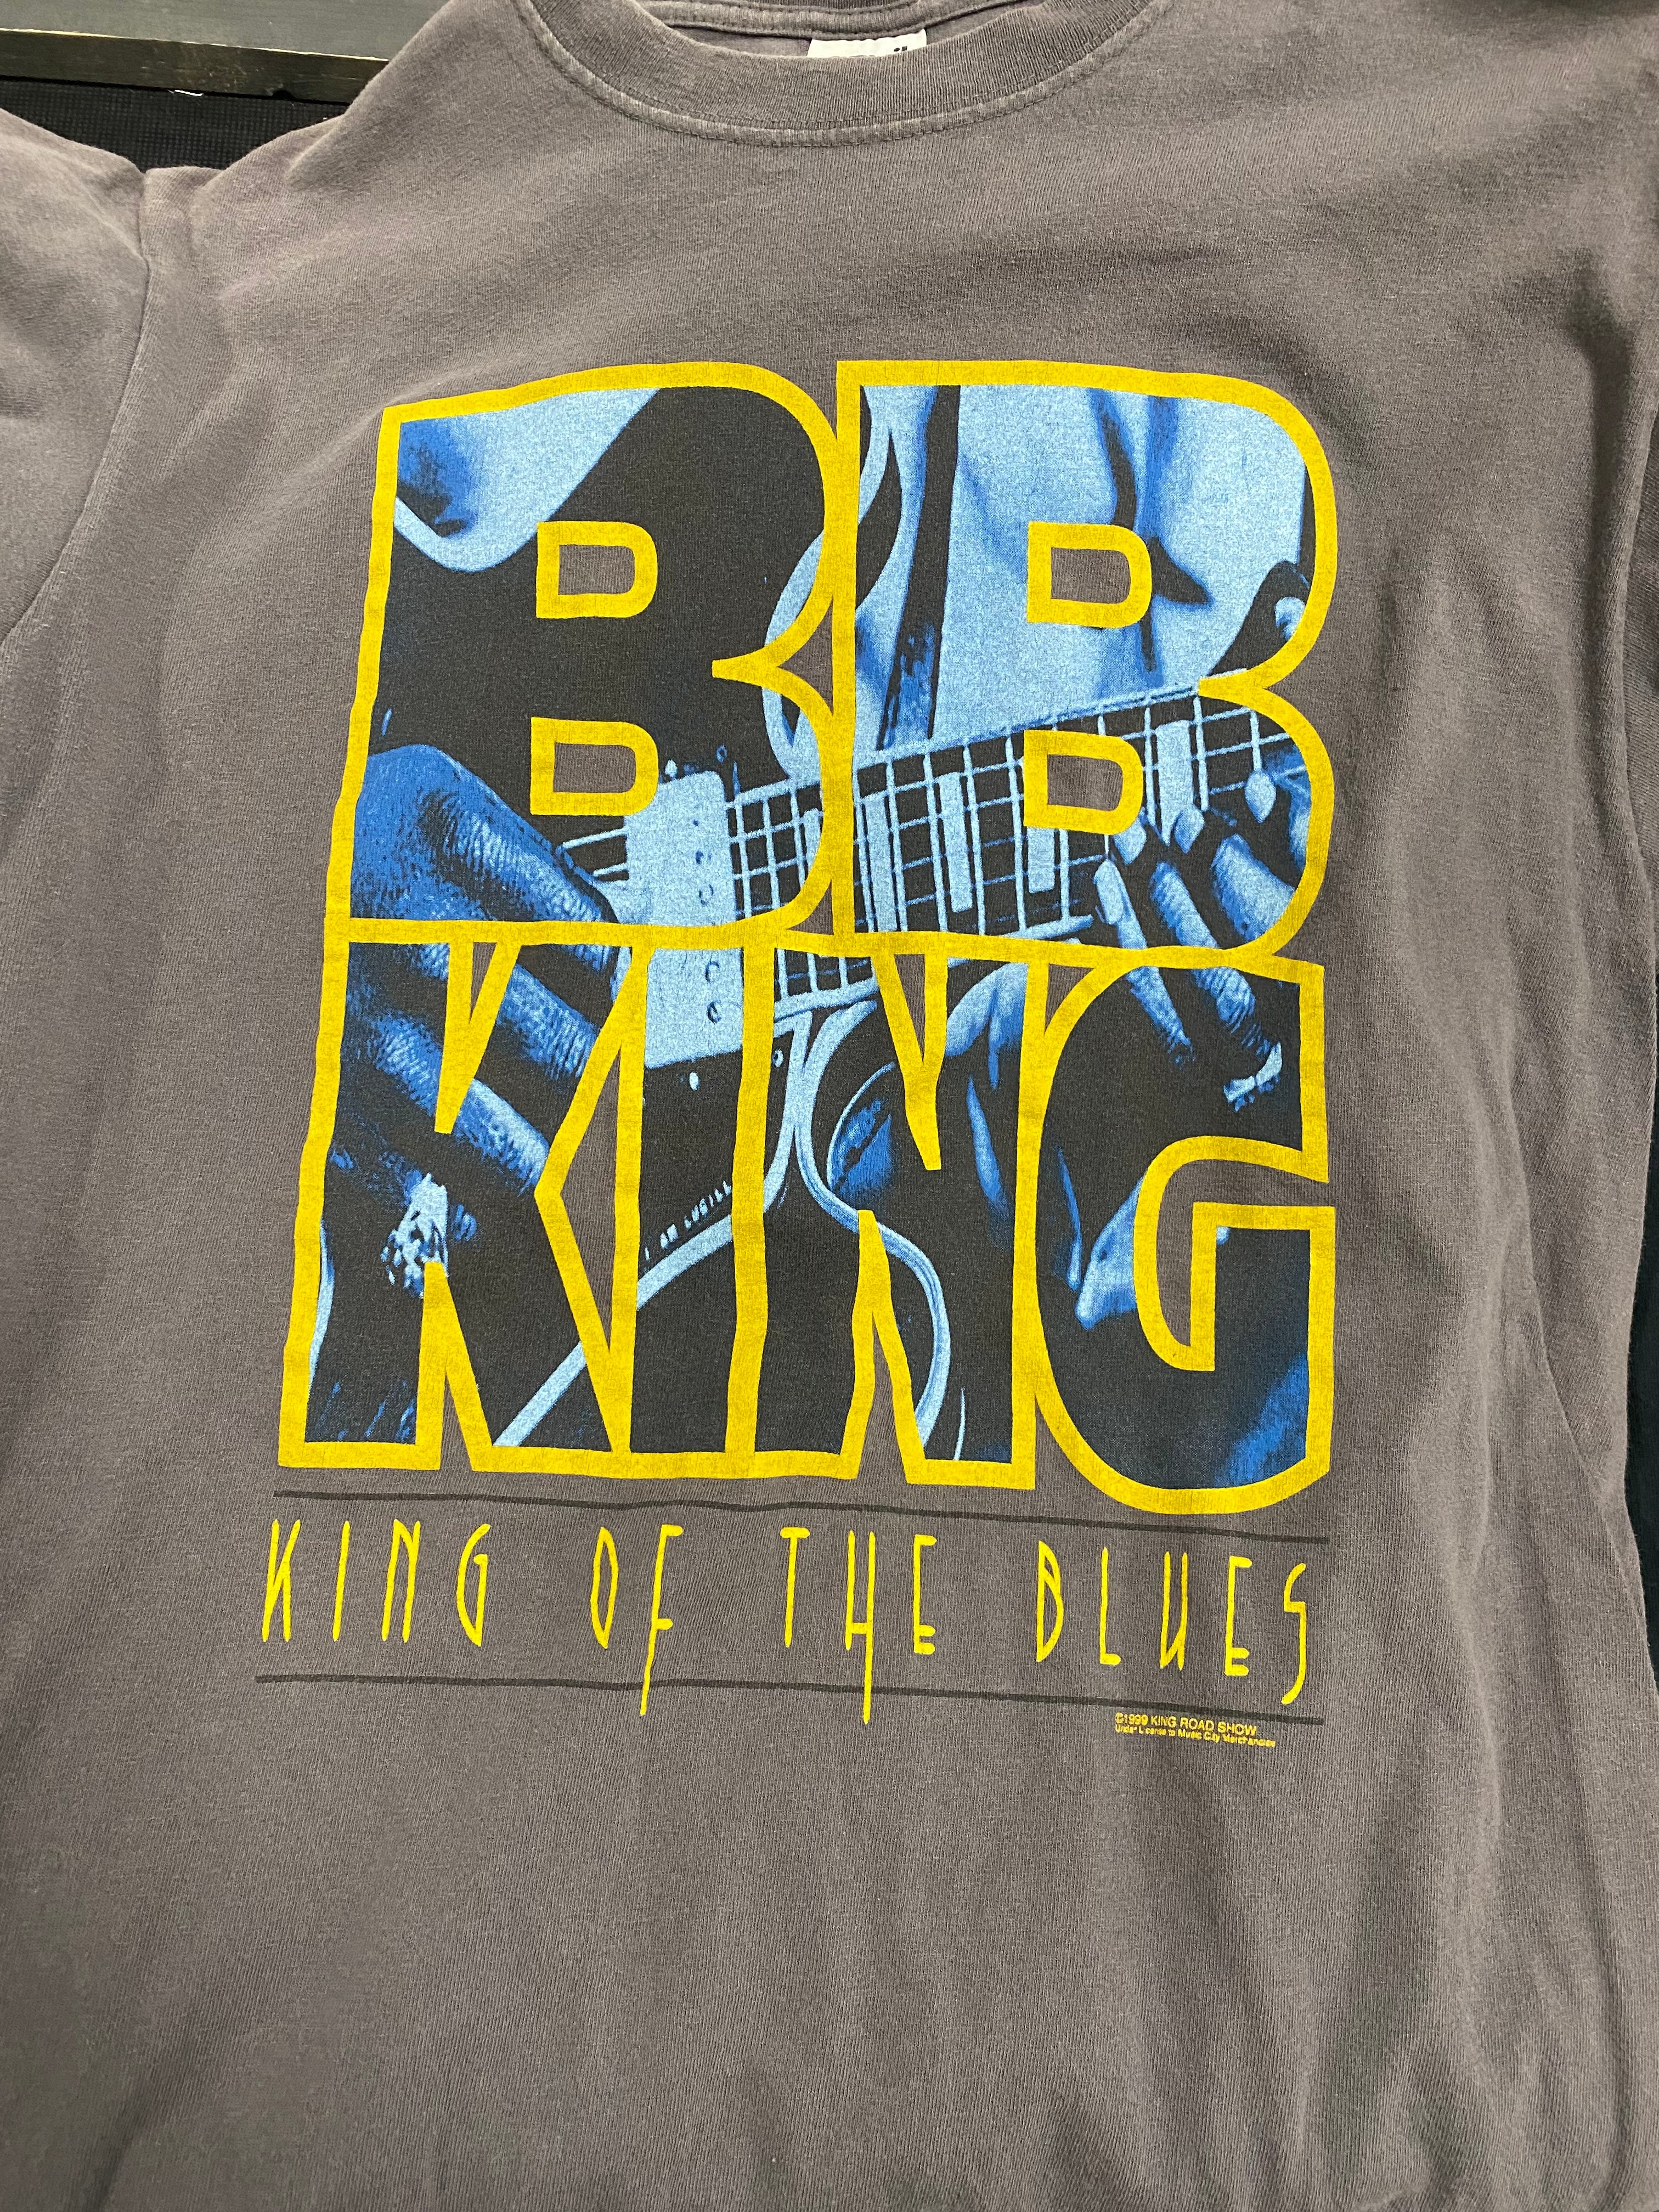 B.B. King 1999 King Of The Blues T-Shirt, Grey, L - Darkside Records